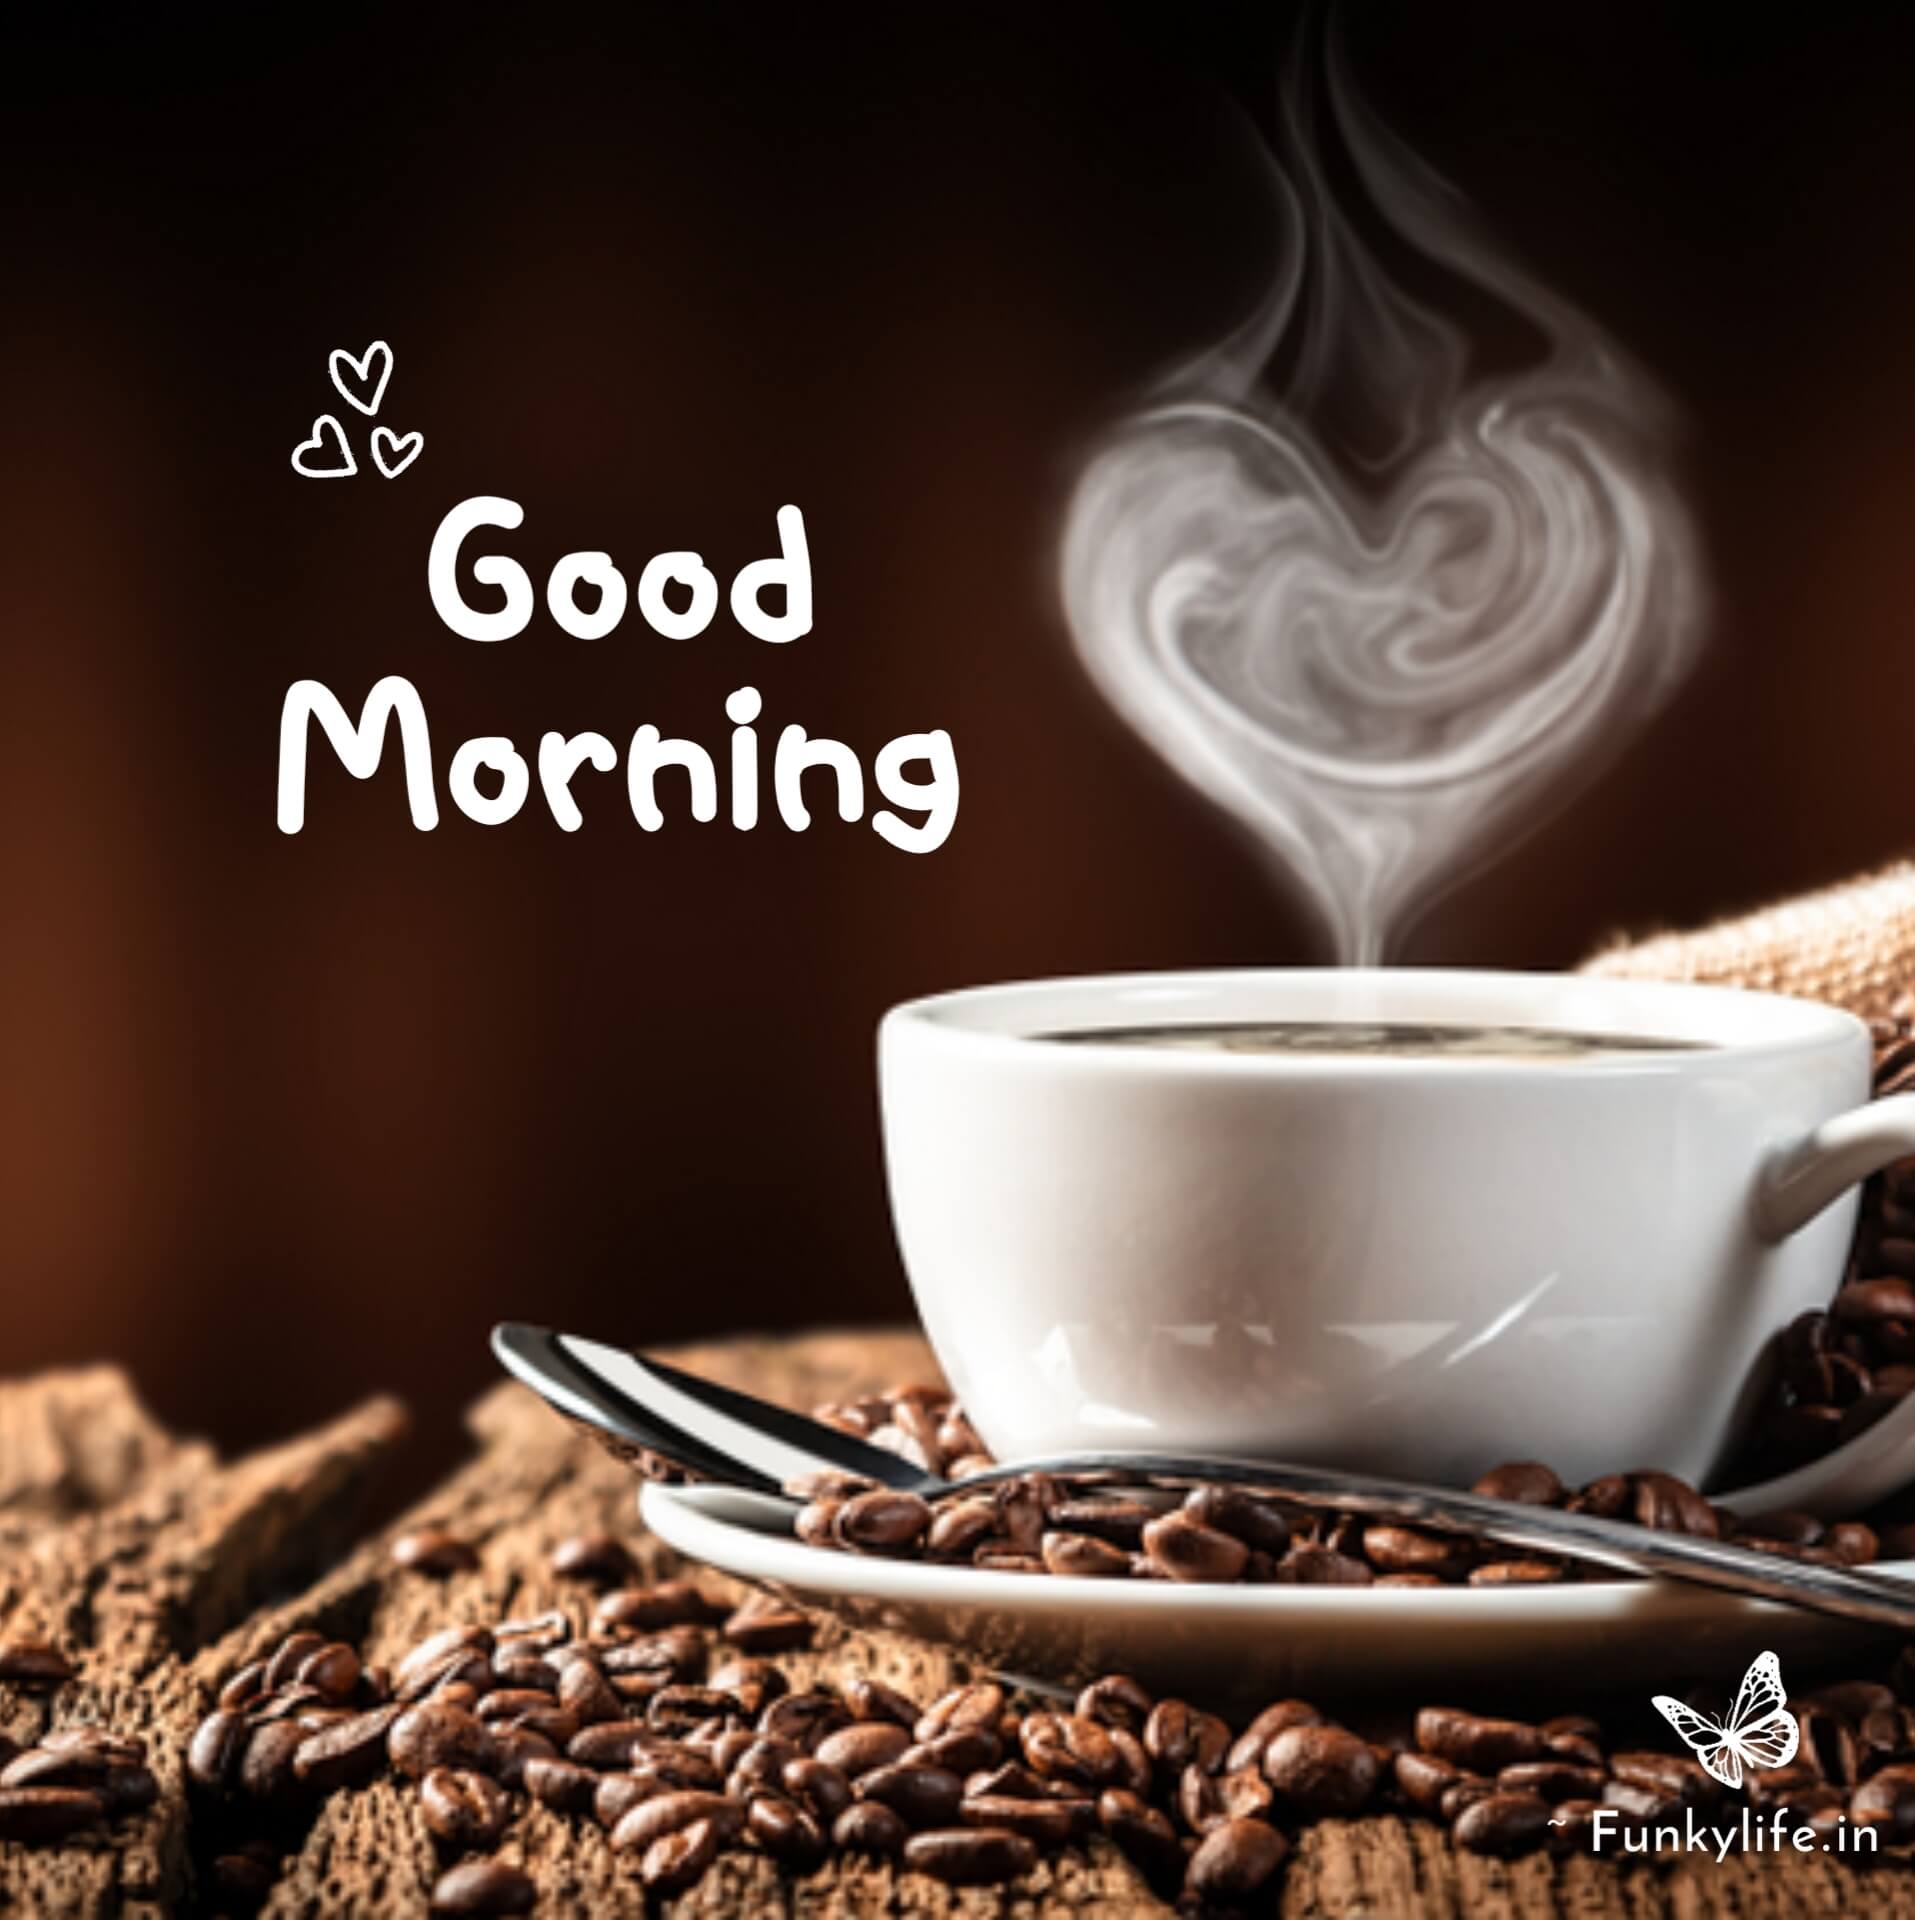 Hot Heart Coffee Good Morning Image